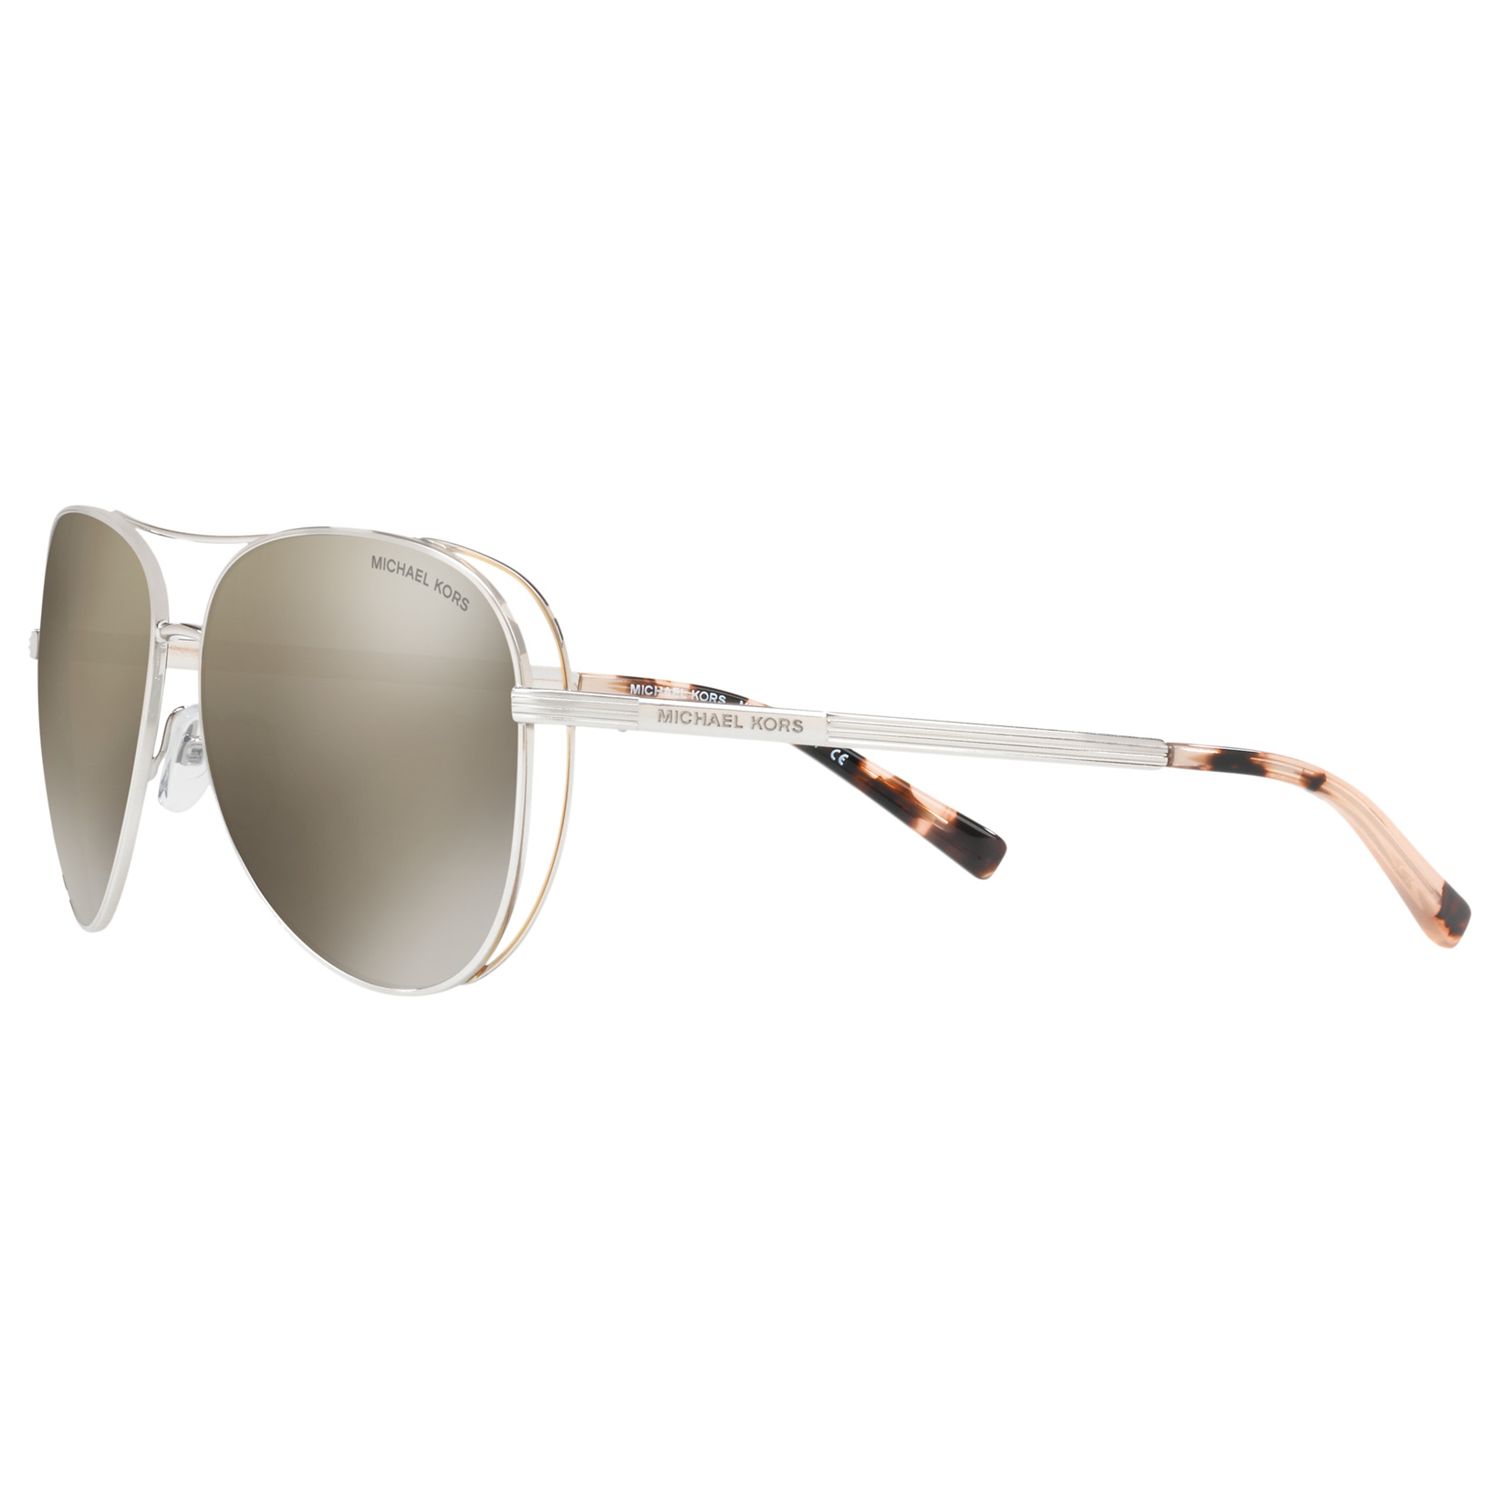 Michael Kors MK1024 Lai Aviator Sunglasses